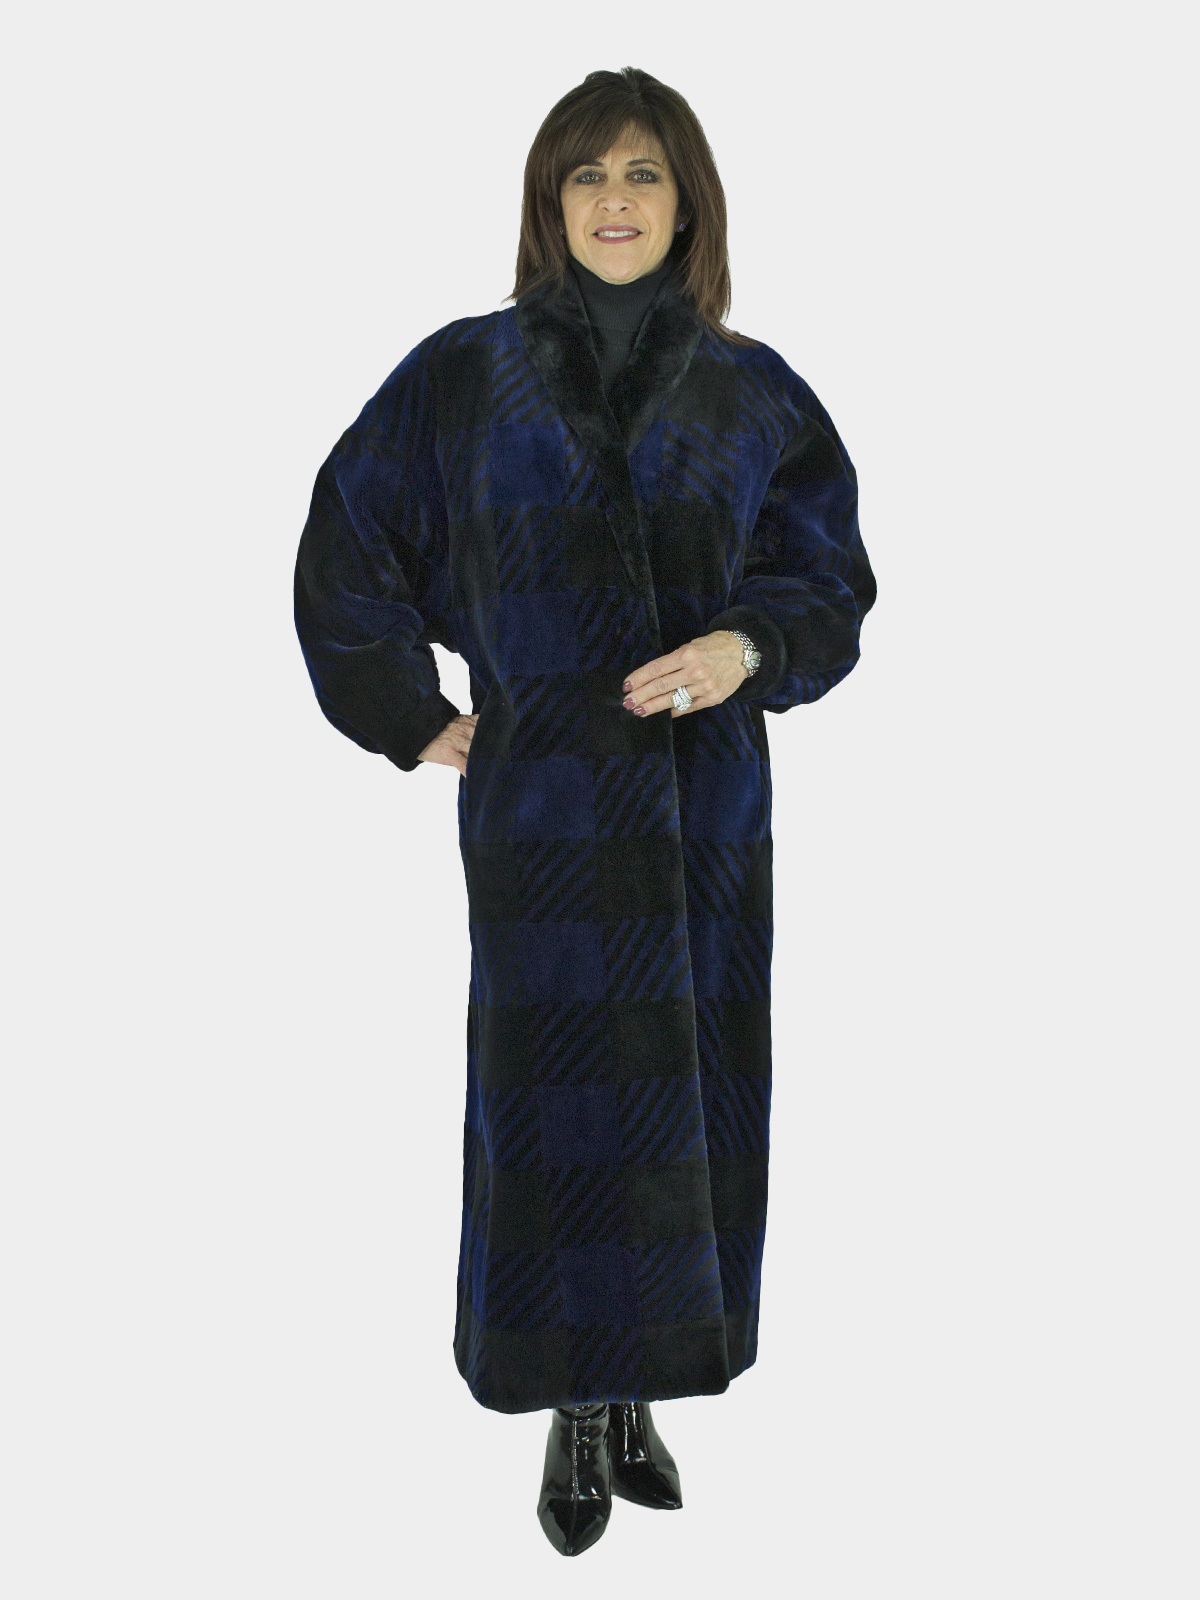 Oscar de La Renta Woman's Checkerboard Sheared Beaver Fur Coat